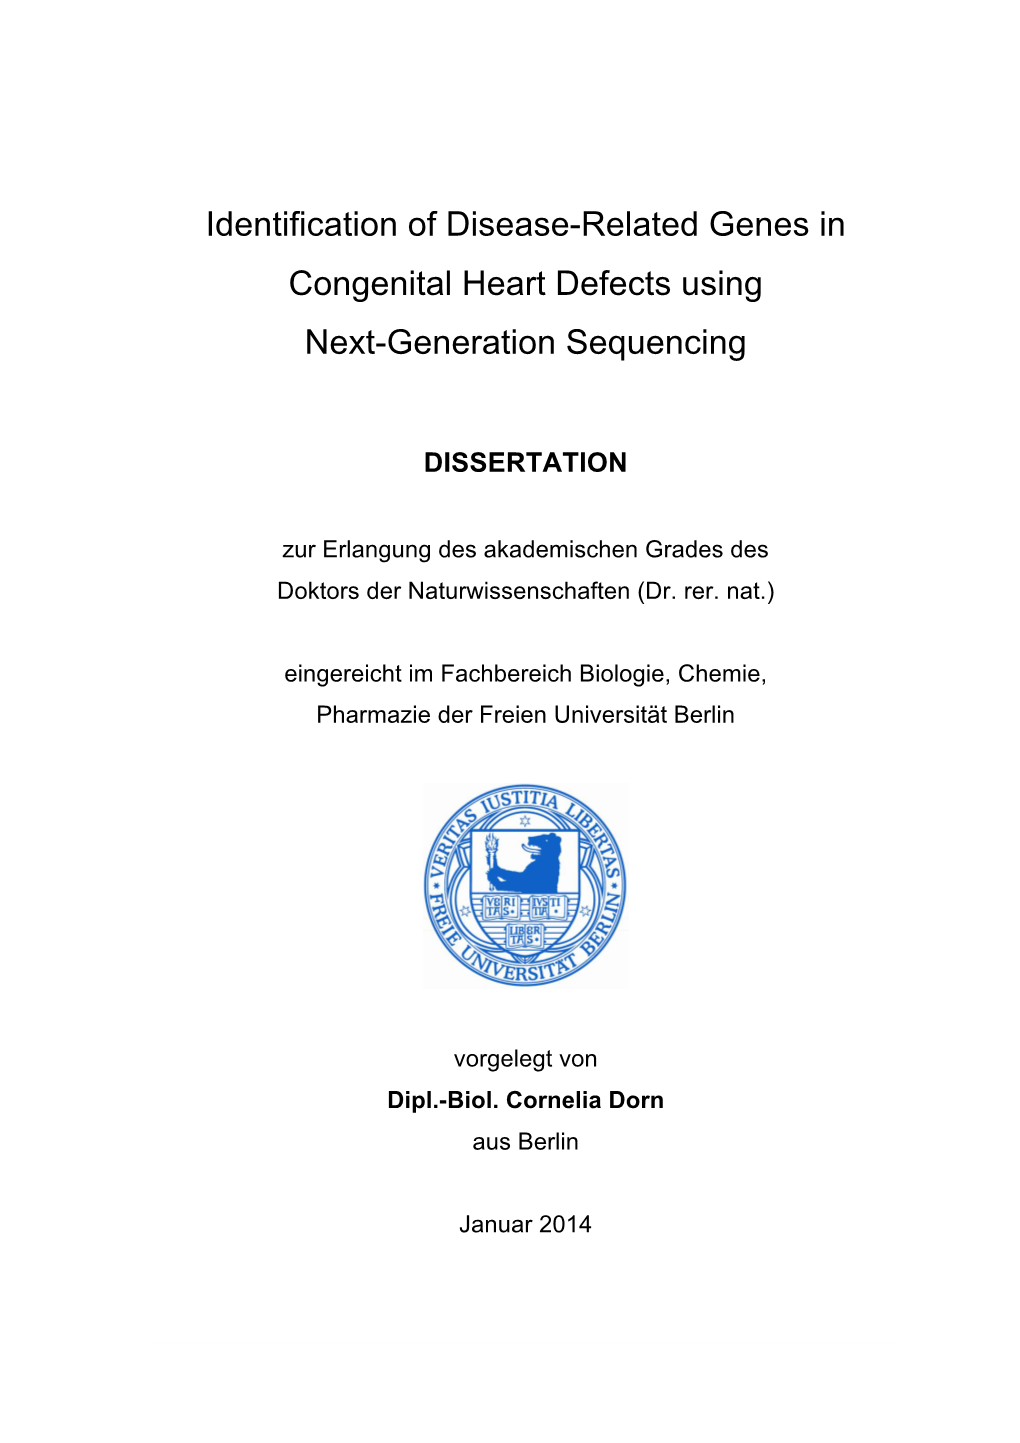 Identification of Disease-Related Genes in Congenital Heart Defects Using